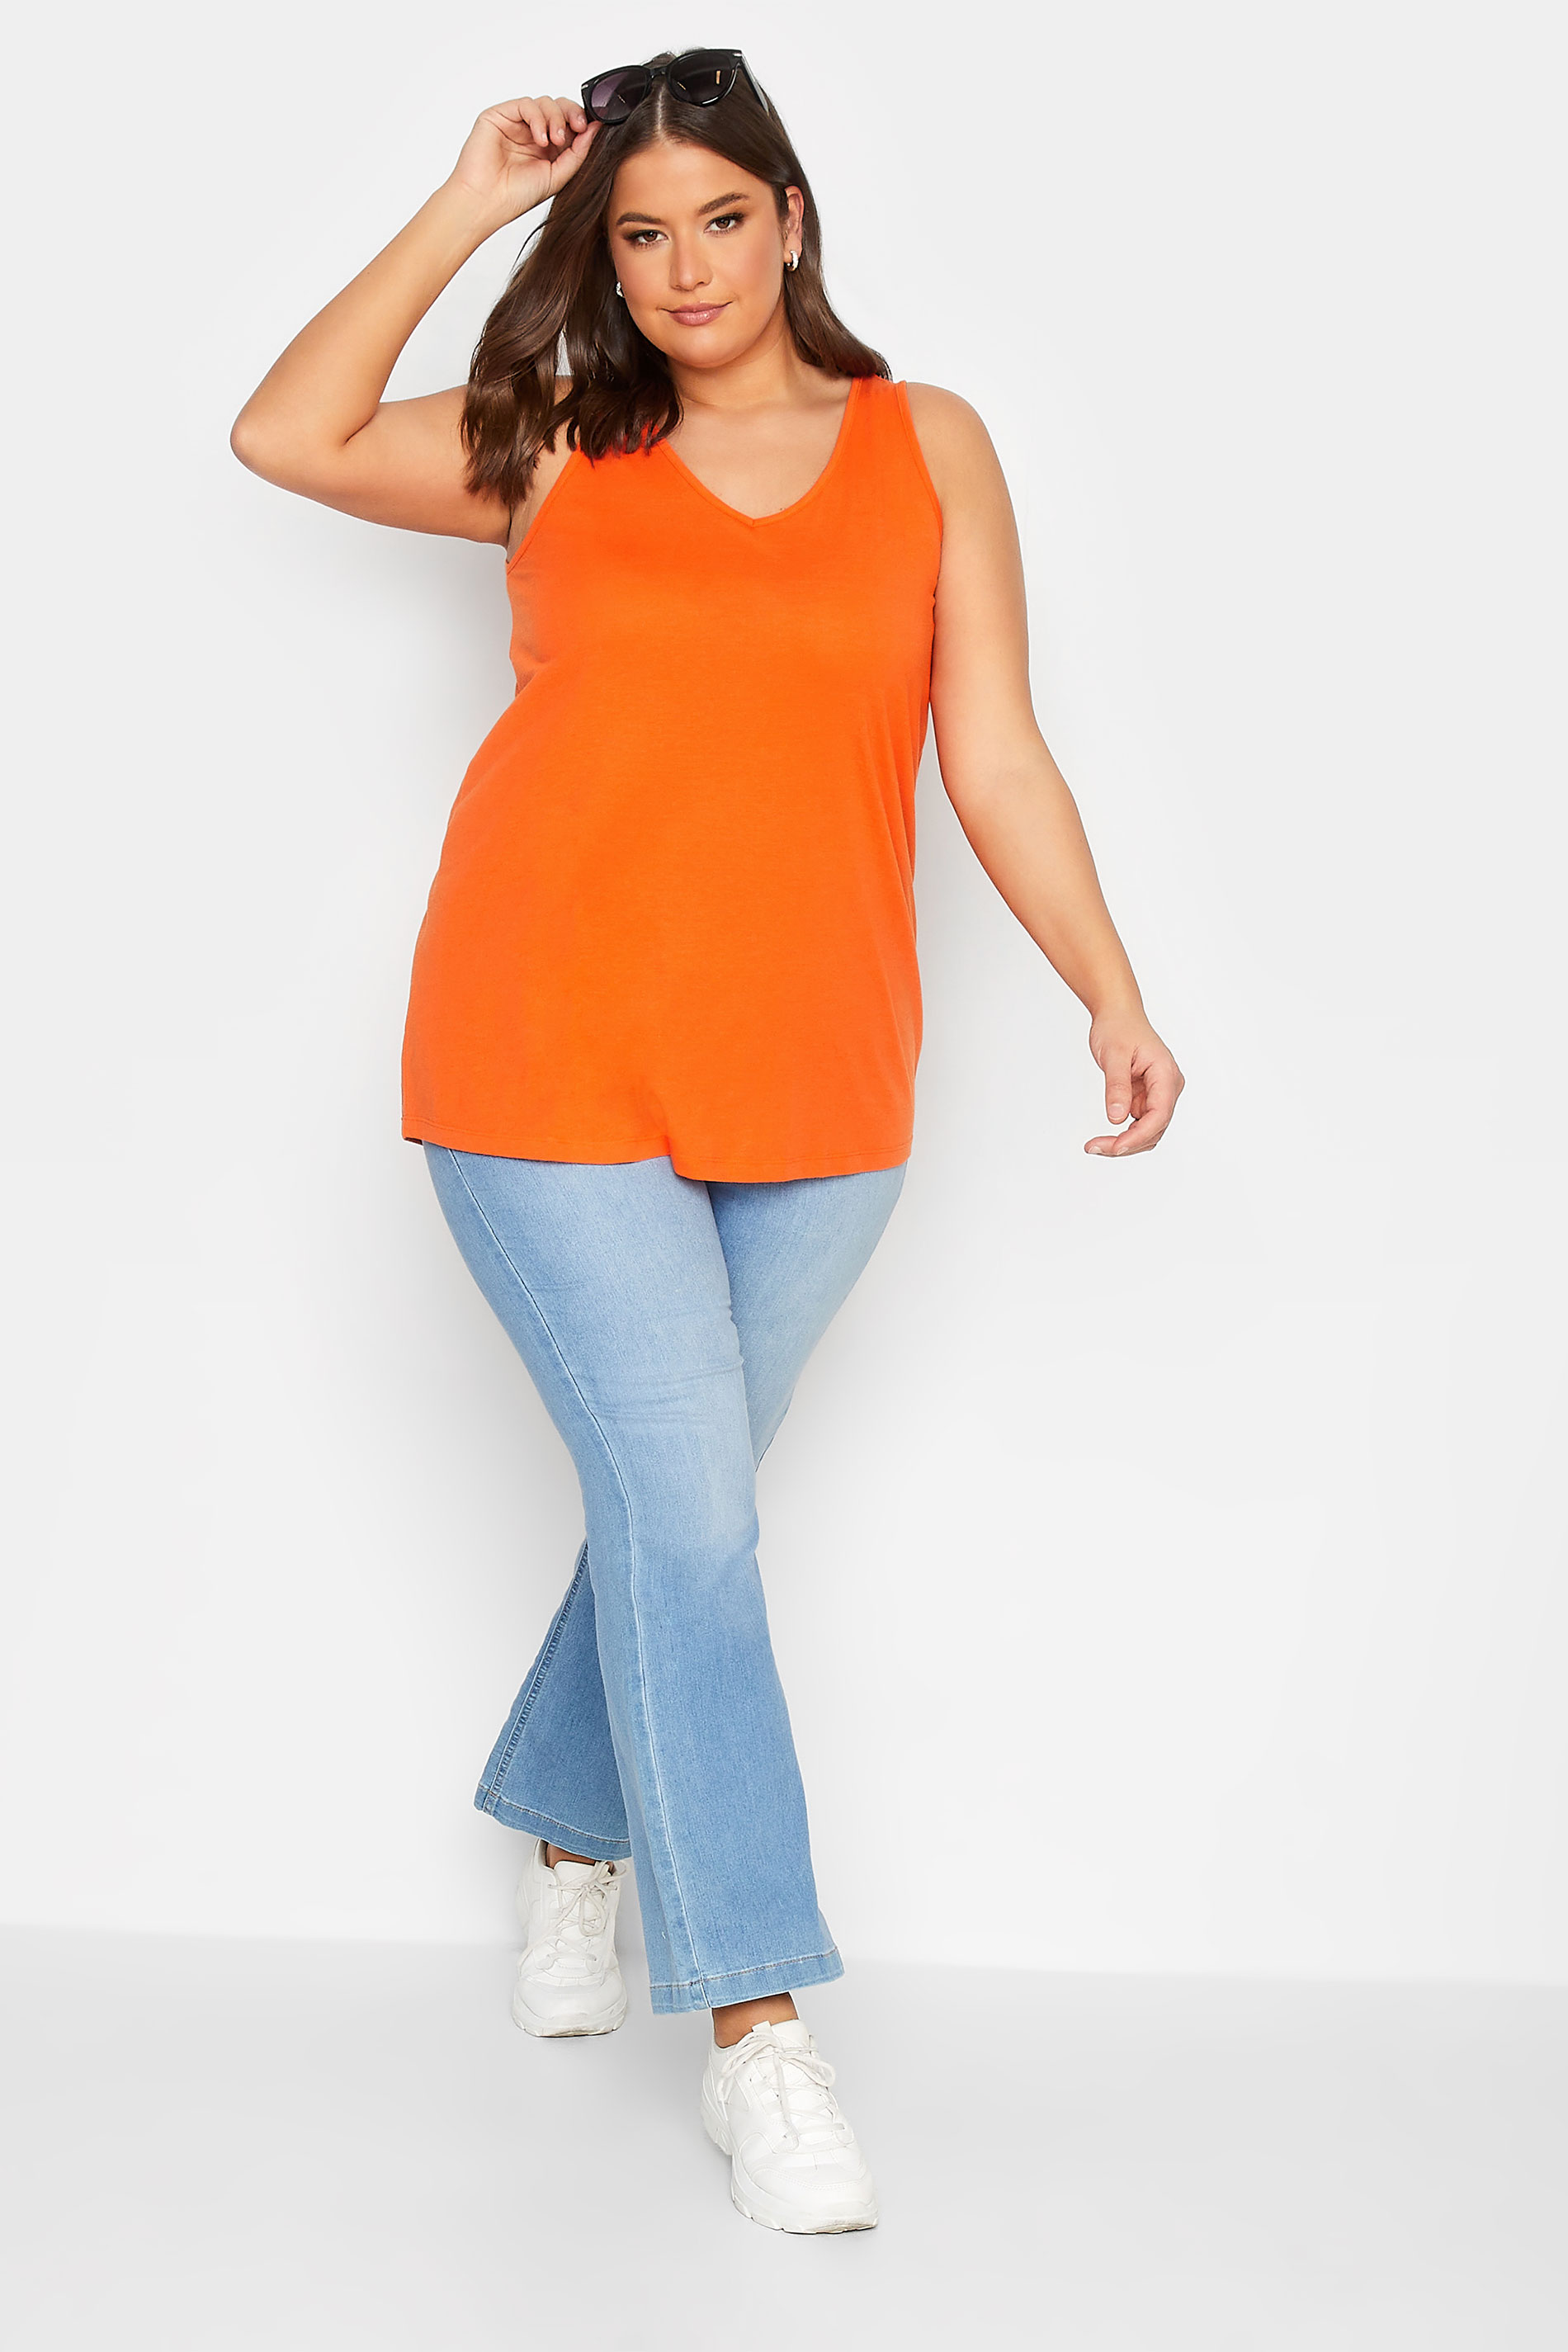 YOURS Plus Size Curve Orange Bar Back Vest Top | Yours Clothing  2